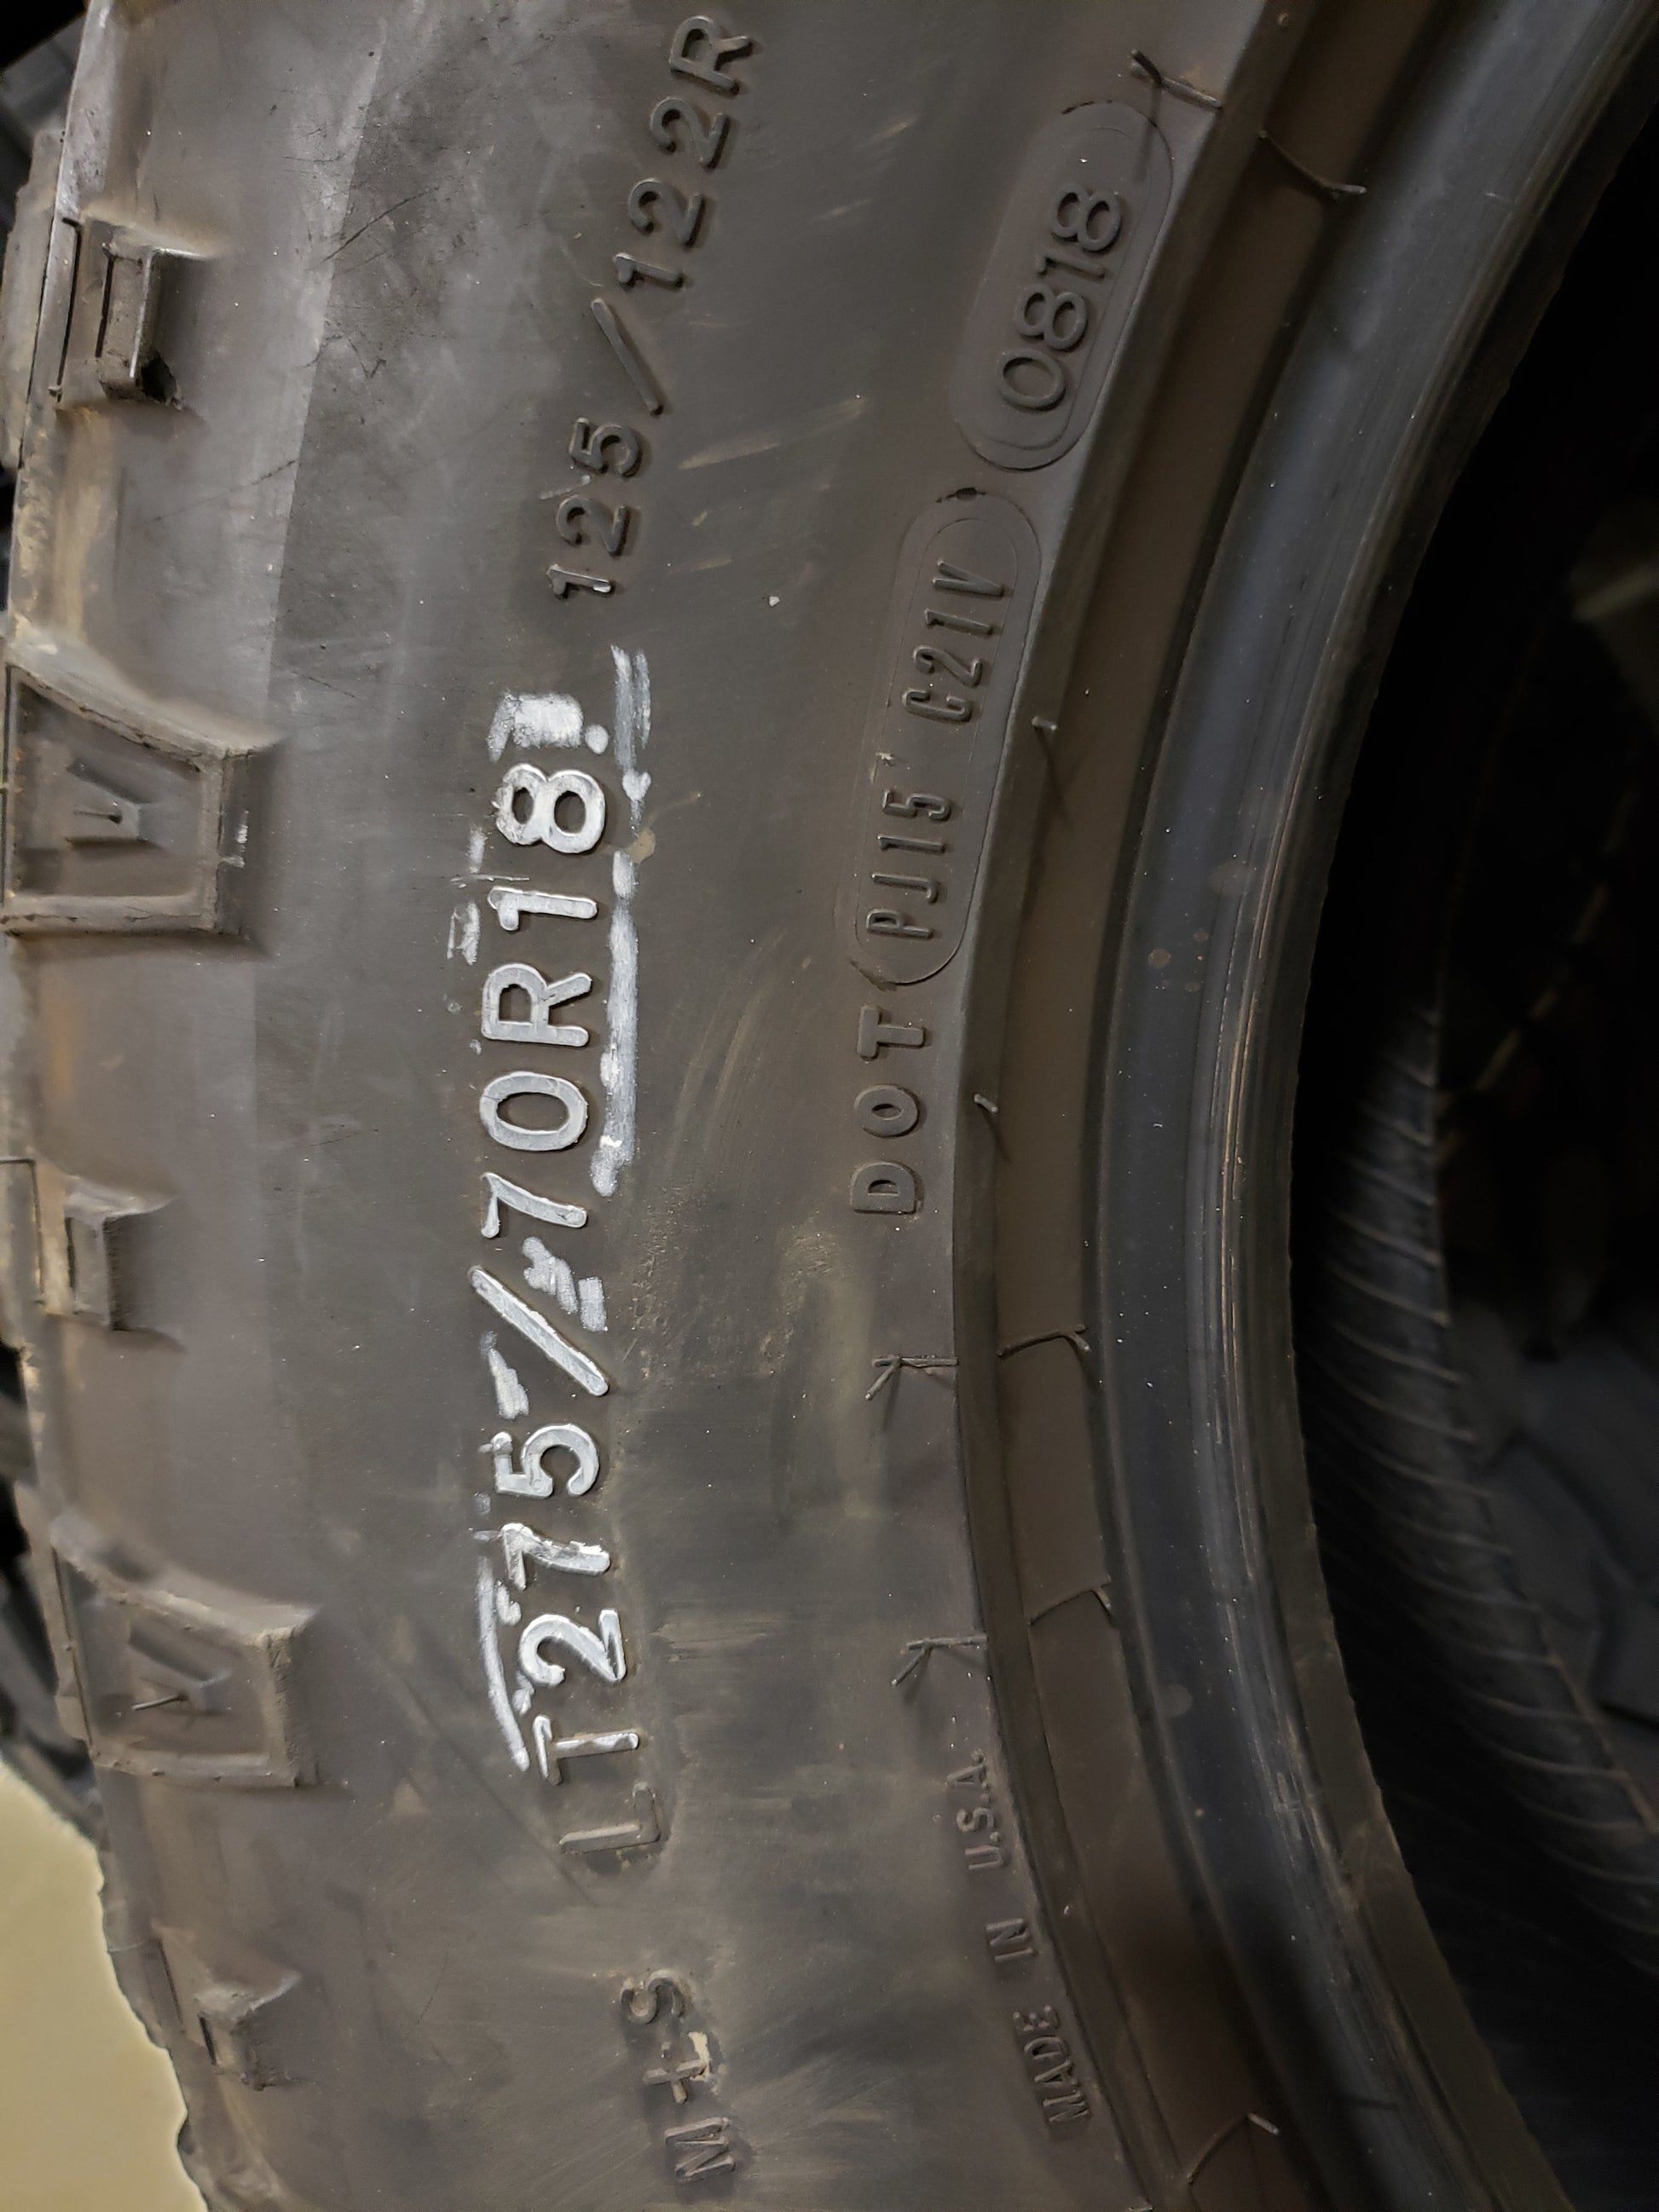 SET OF 4 275/70R18 Goodyear Wrangler Duratrac 125/122 R E - Used Tires